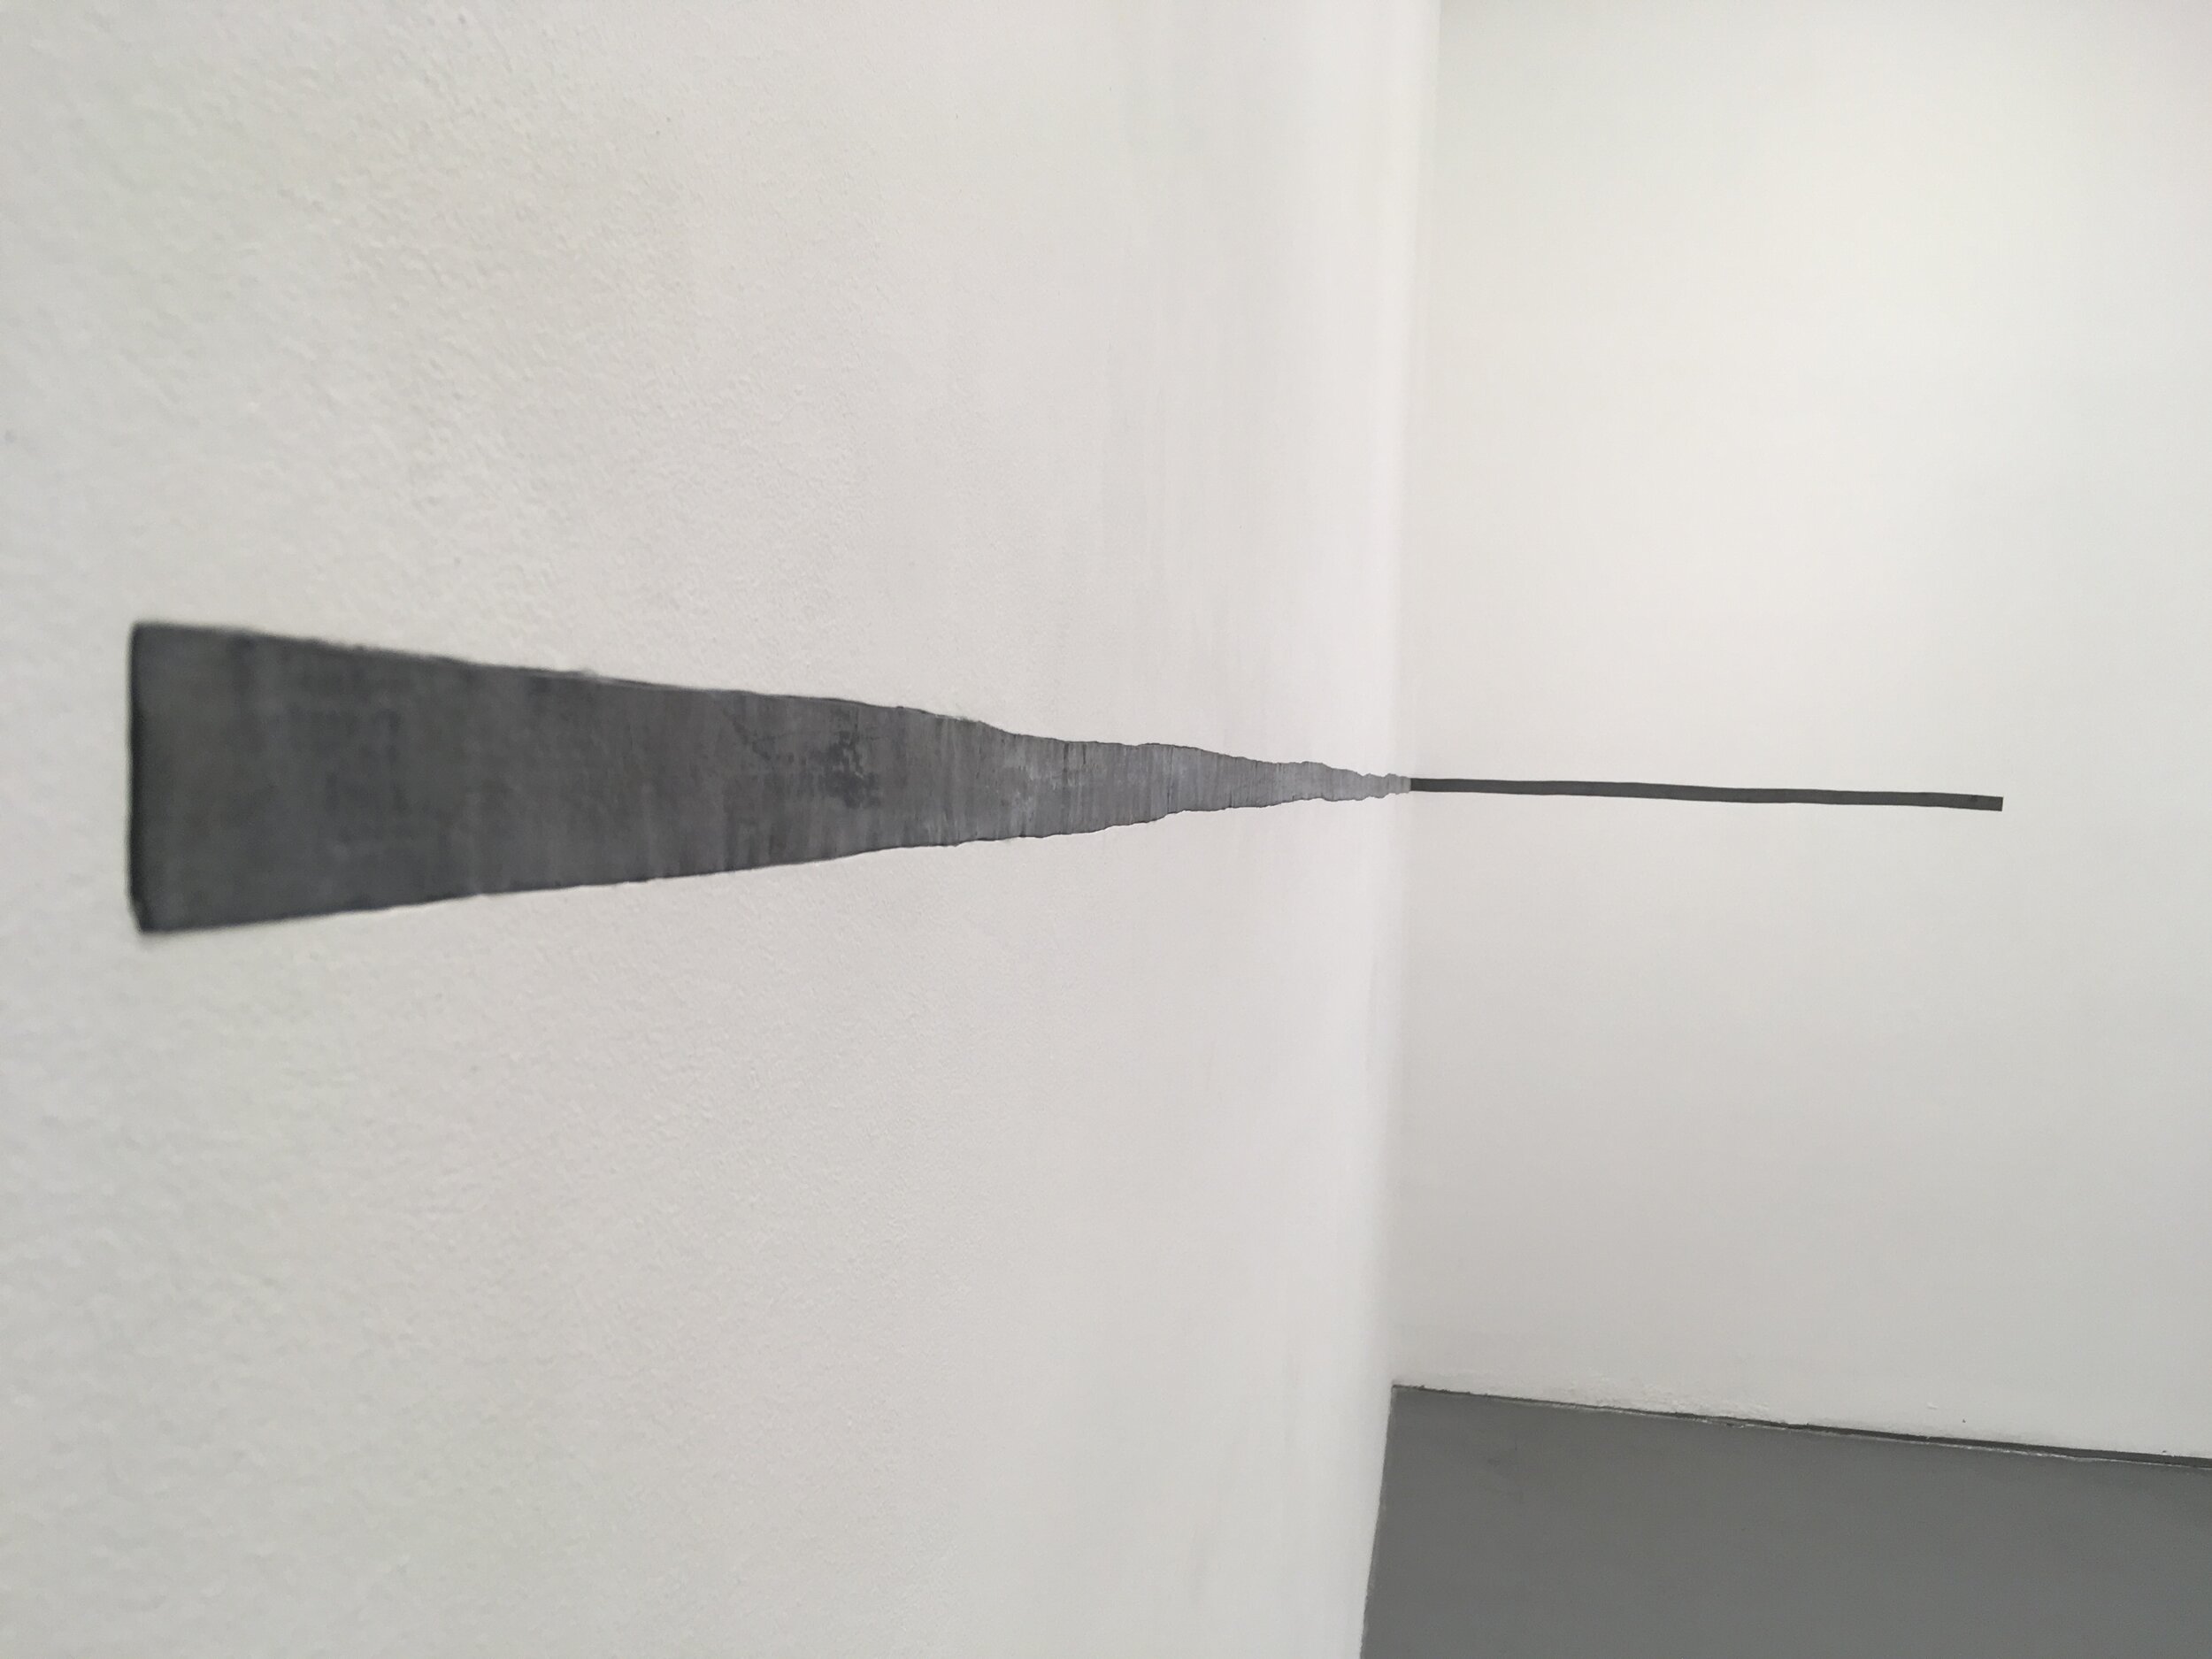  Klaus Von Nichtssagend September 6 - October 13, 2019  18 feet 8 inch Line Lead embedded into sheetrock wall 